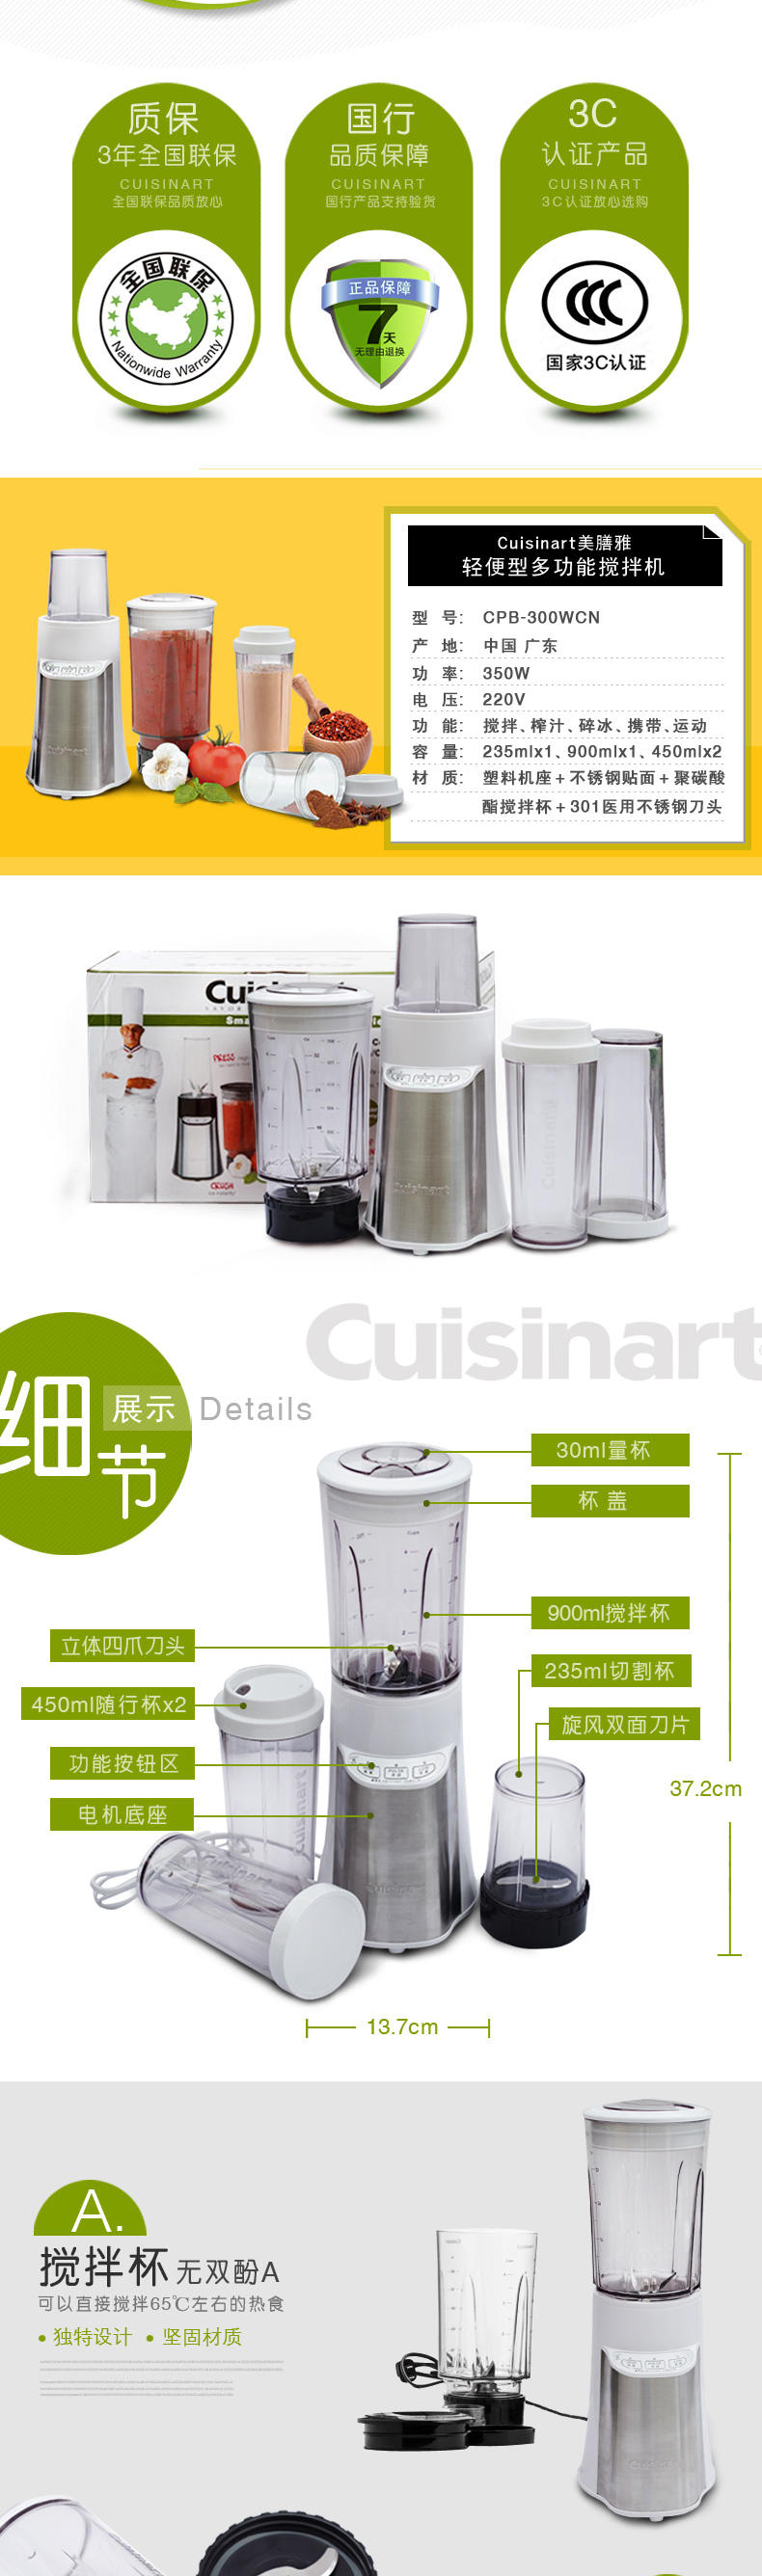 Cuisinart/美膳雅 全球同款 CPB-300WCN搅拌机 家用多功能辅食料理机绞肉机